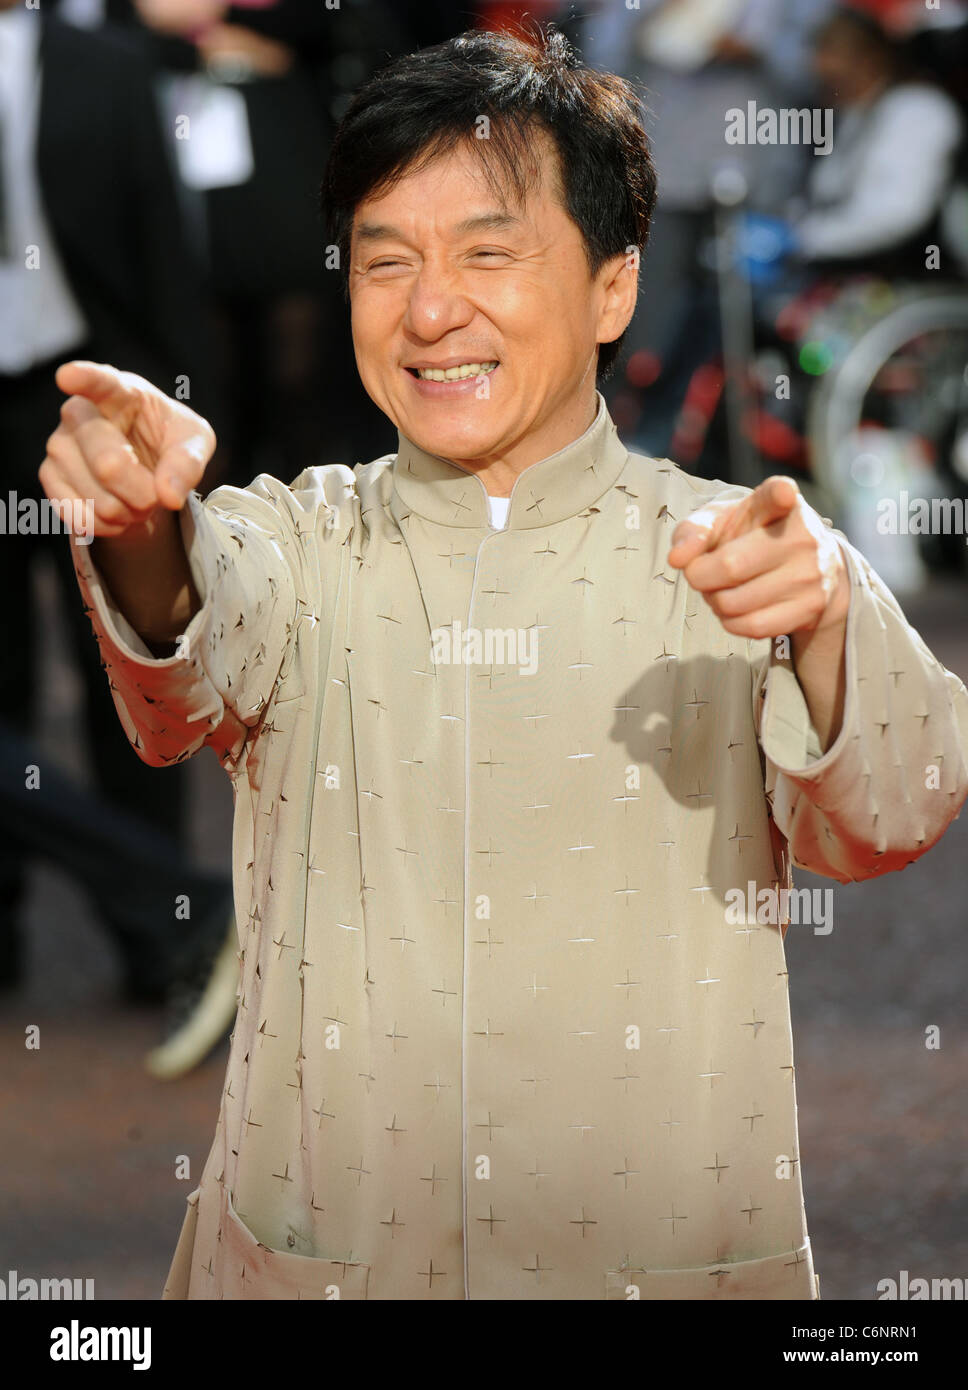 Jackie Chan UK film premiere of Karate Kid held at the Odeon cinema London, England - 15.07.10 Stock Photo